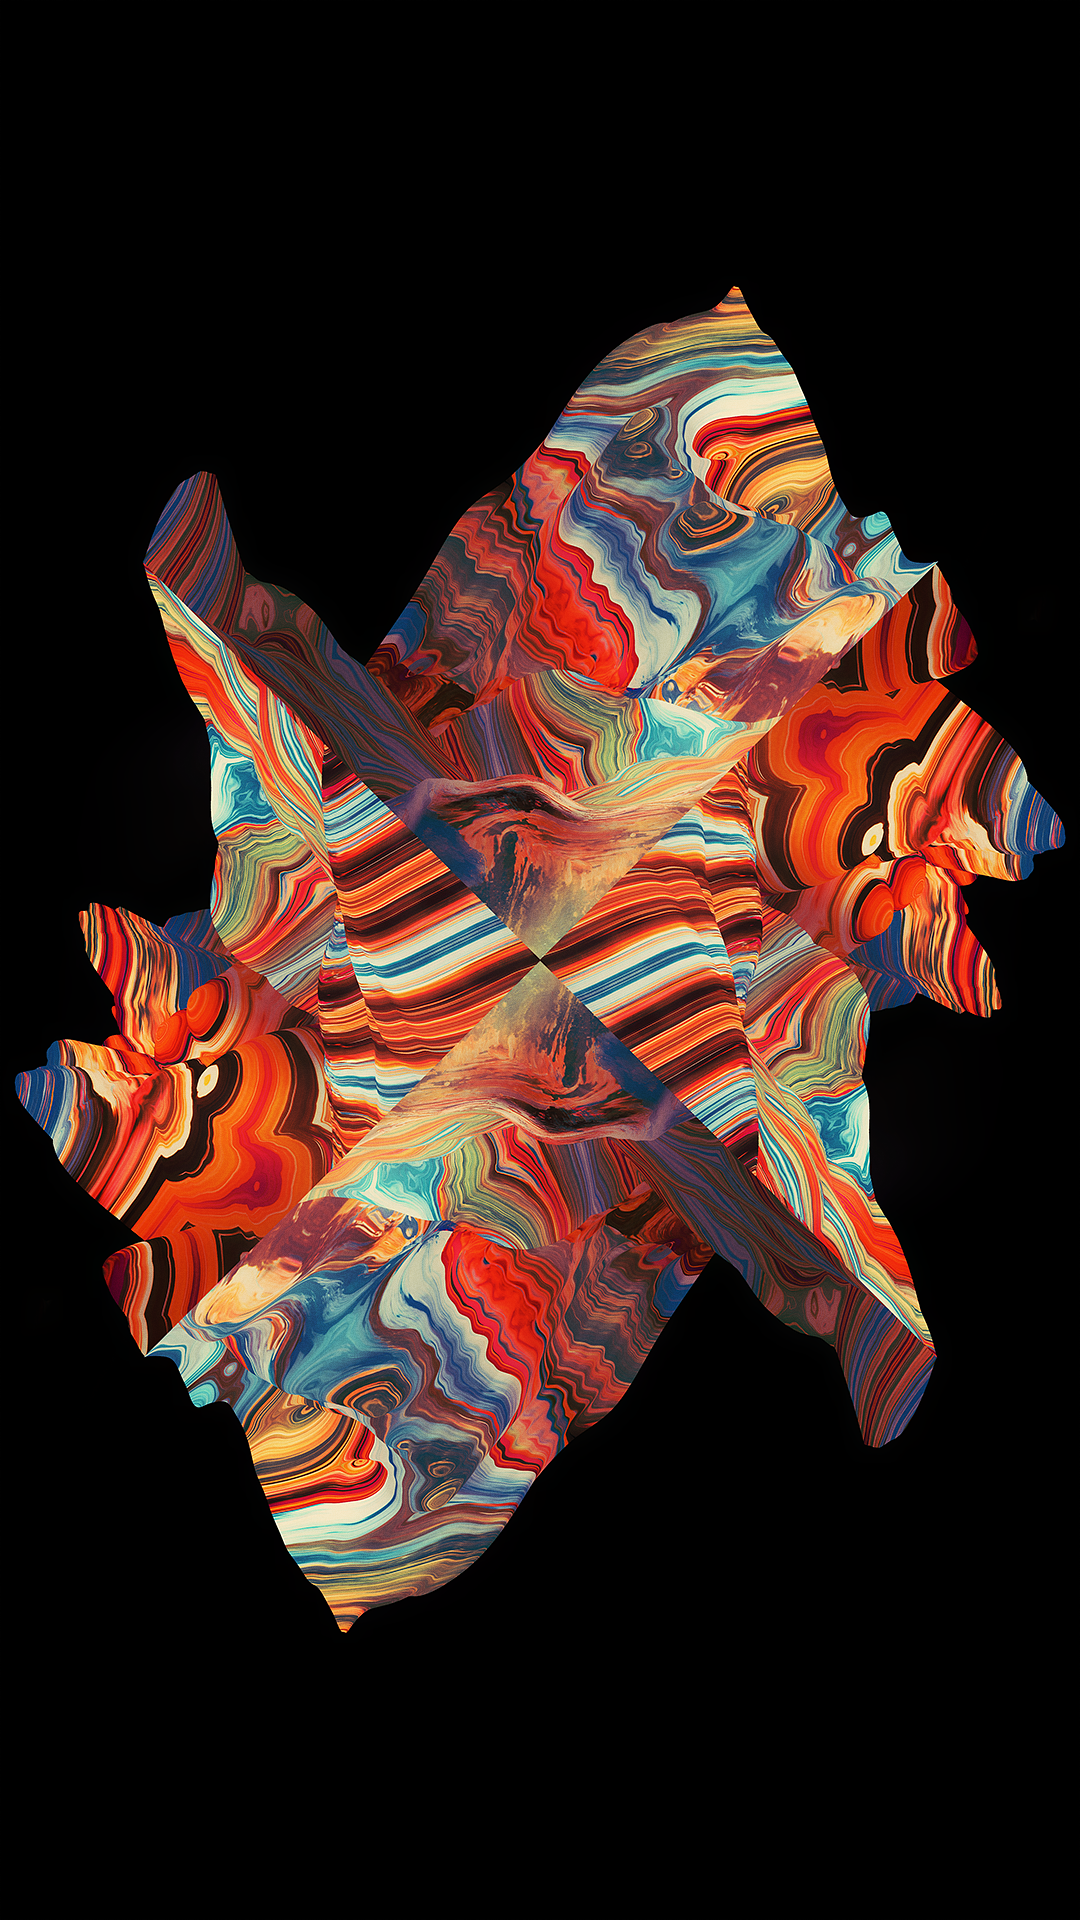 fond d'écran oneplus x,orange,art fractal,t shirt,art,illustration